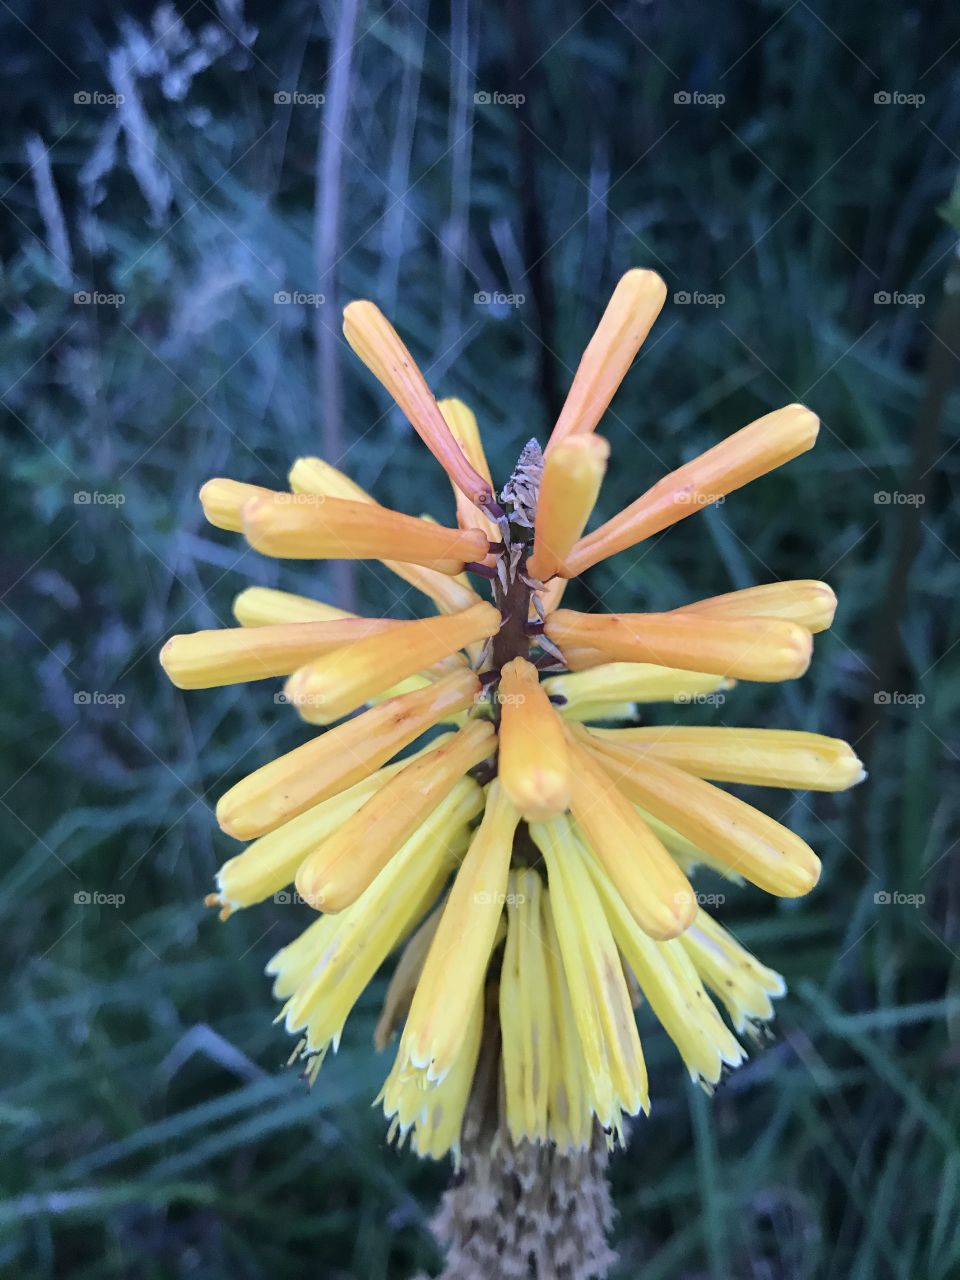 Orange
Yellow 
Flower